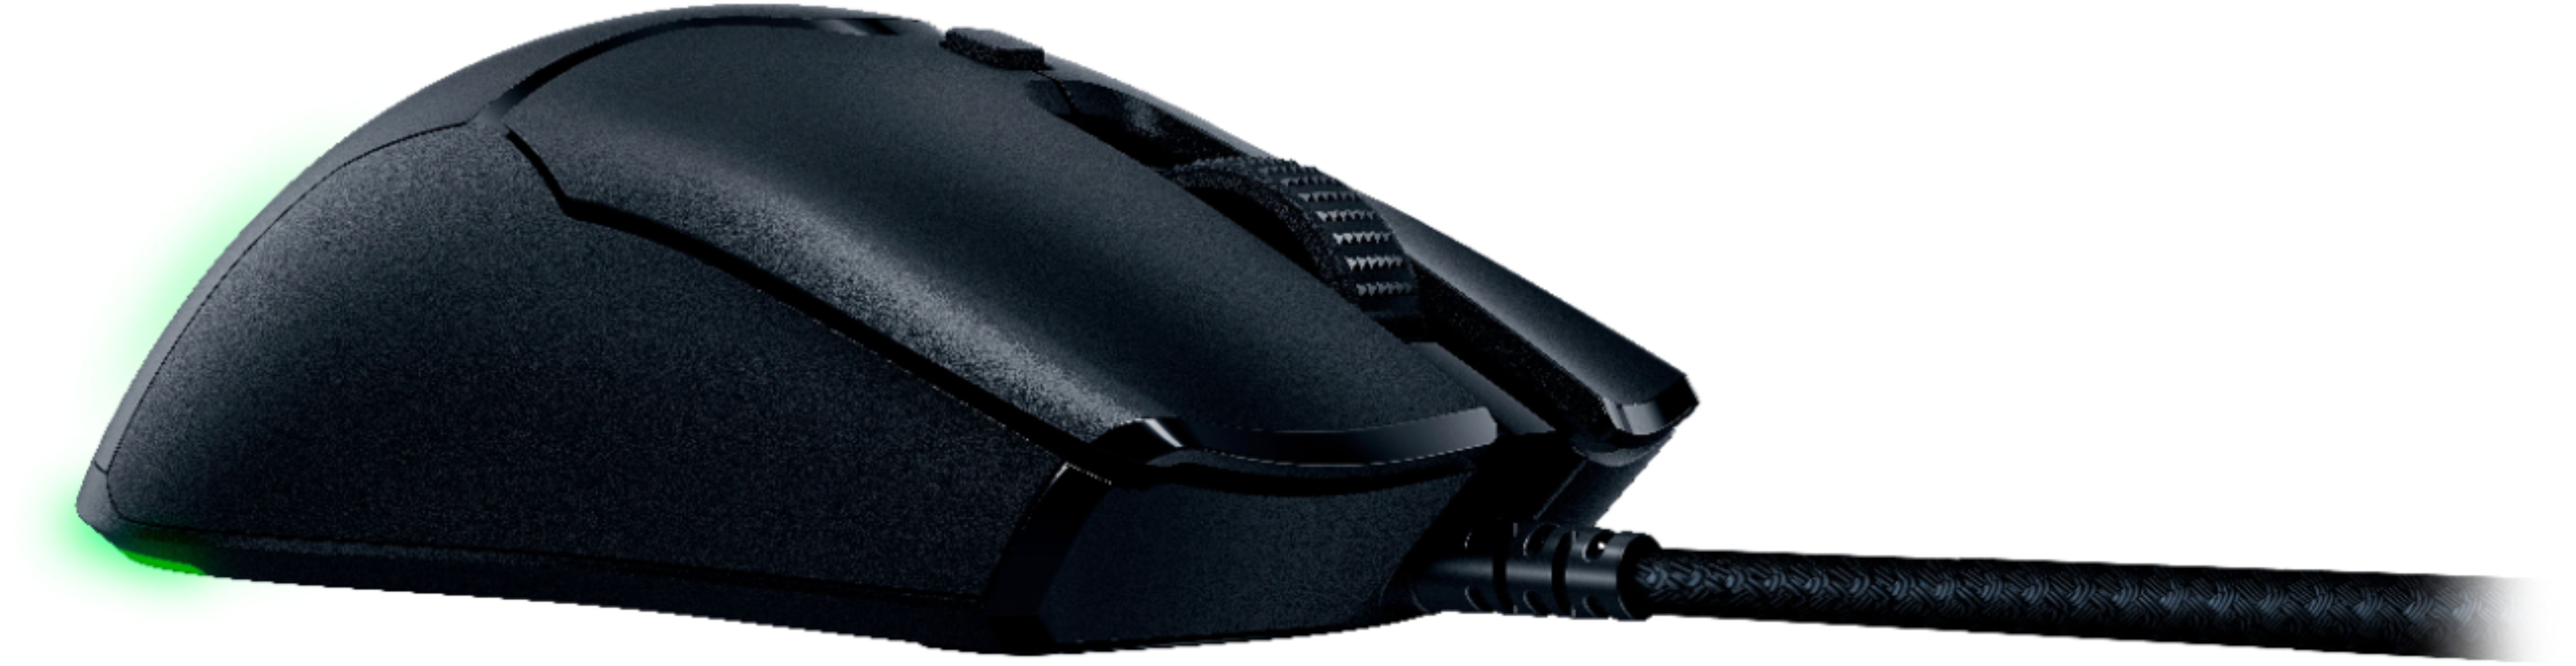 Razer Viper Mini Mouse Lightweight Gamer Mouse Advanced Optical Sensor Gift  for Gamer Pro Player Computer Laptop Gaming